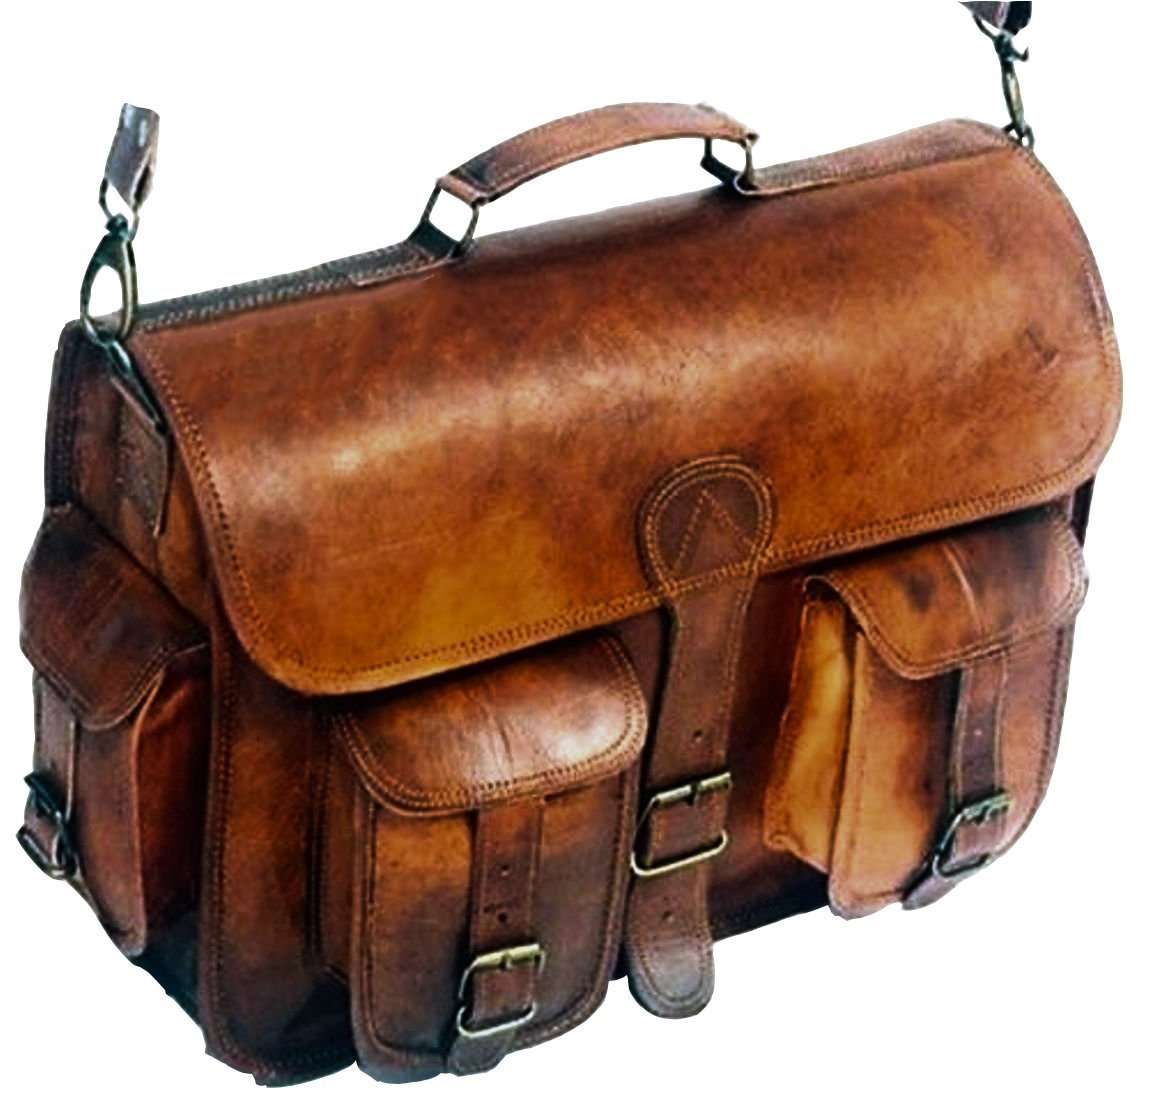 Fiorelli Standard City Equipment red vegan leather purse handbag pocketbook  | eBay